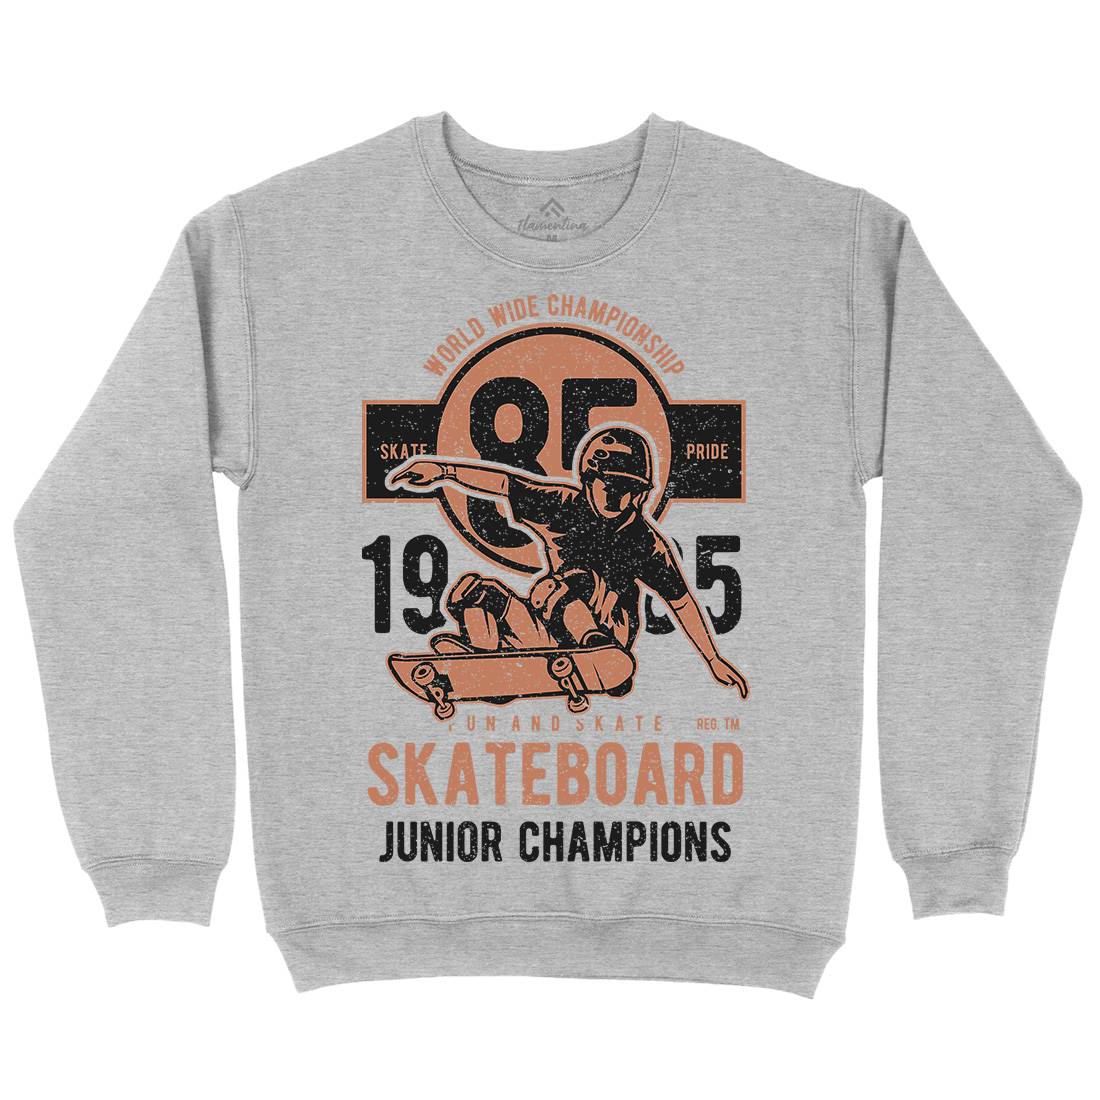 Skateboard Junior Champions Kids Crew Neck Sweatshirt Skate A755